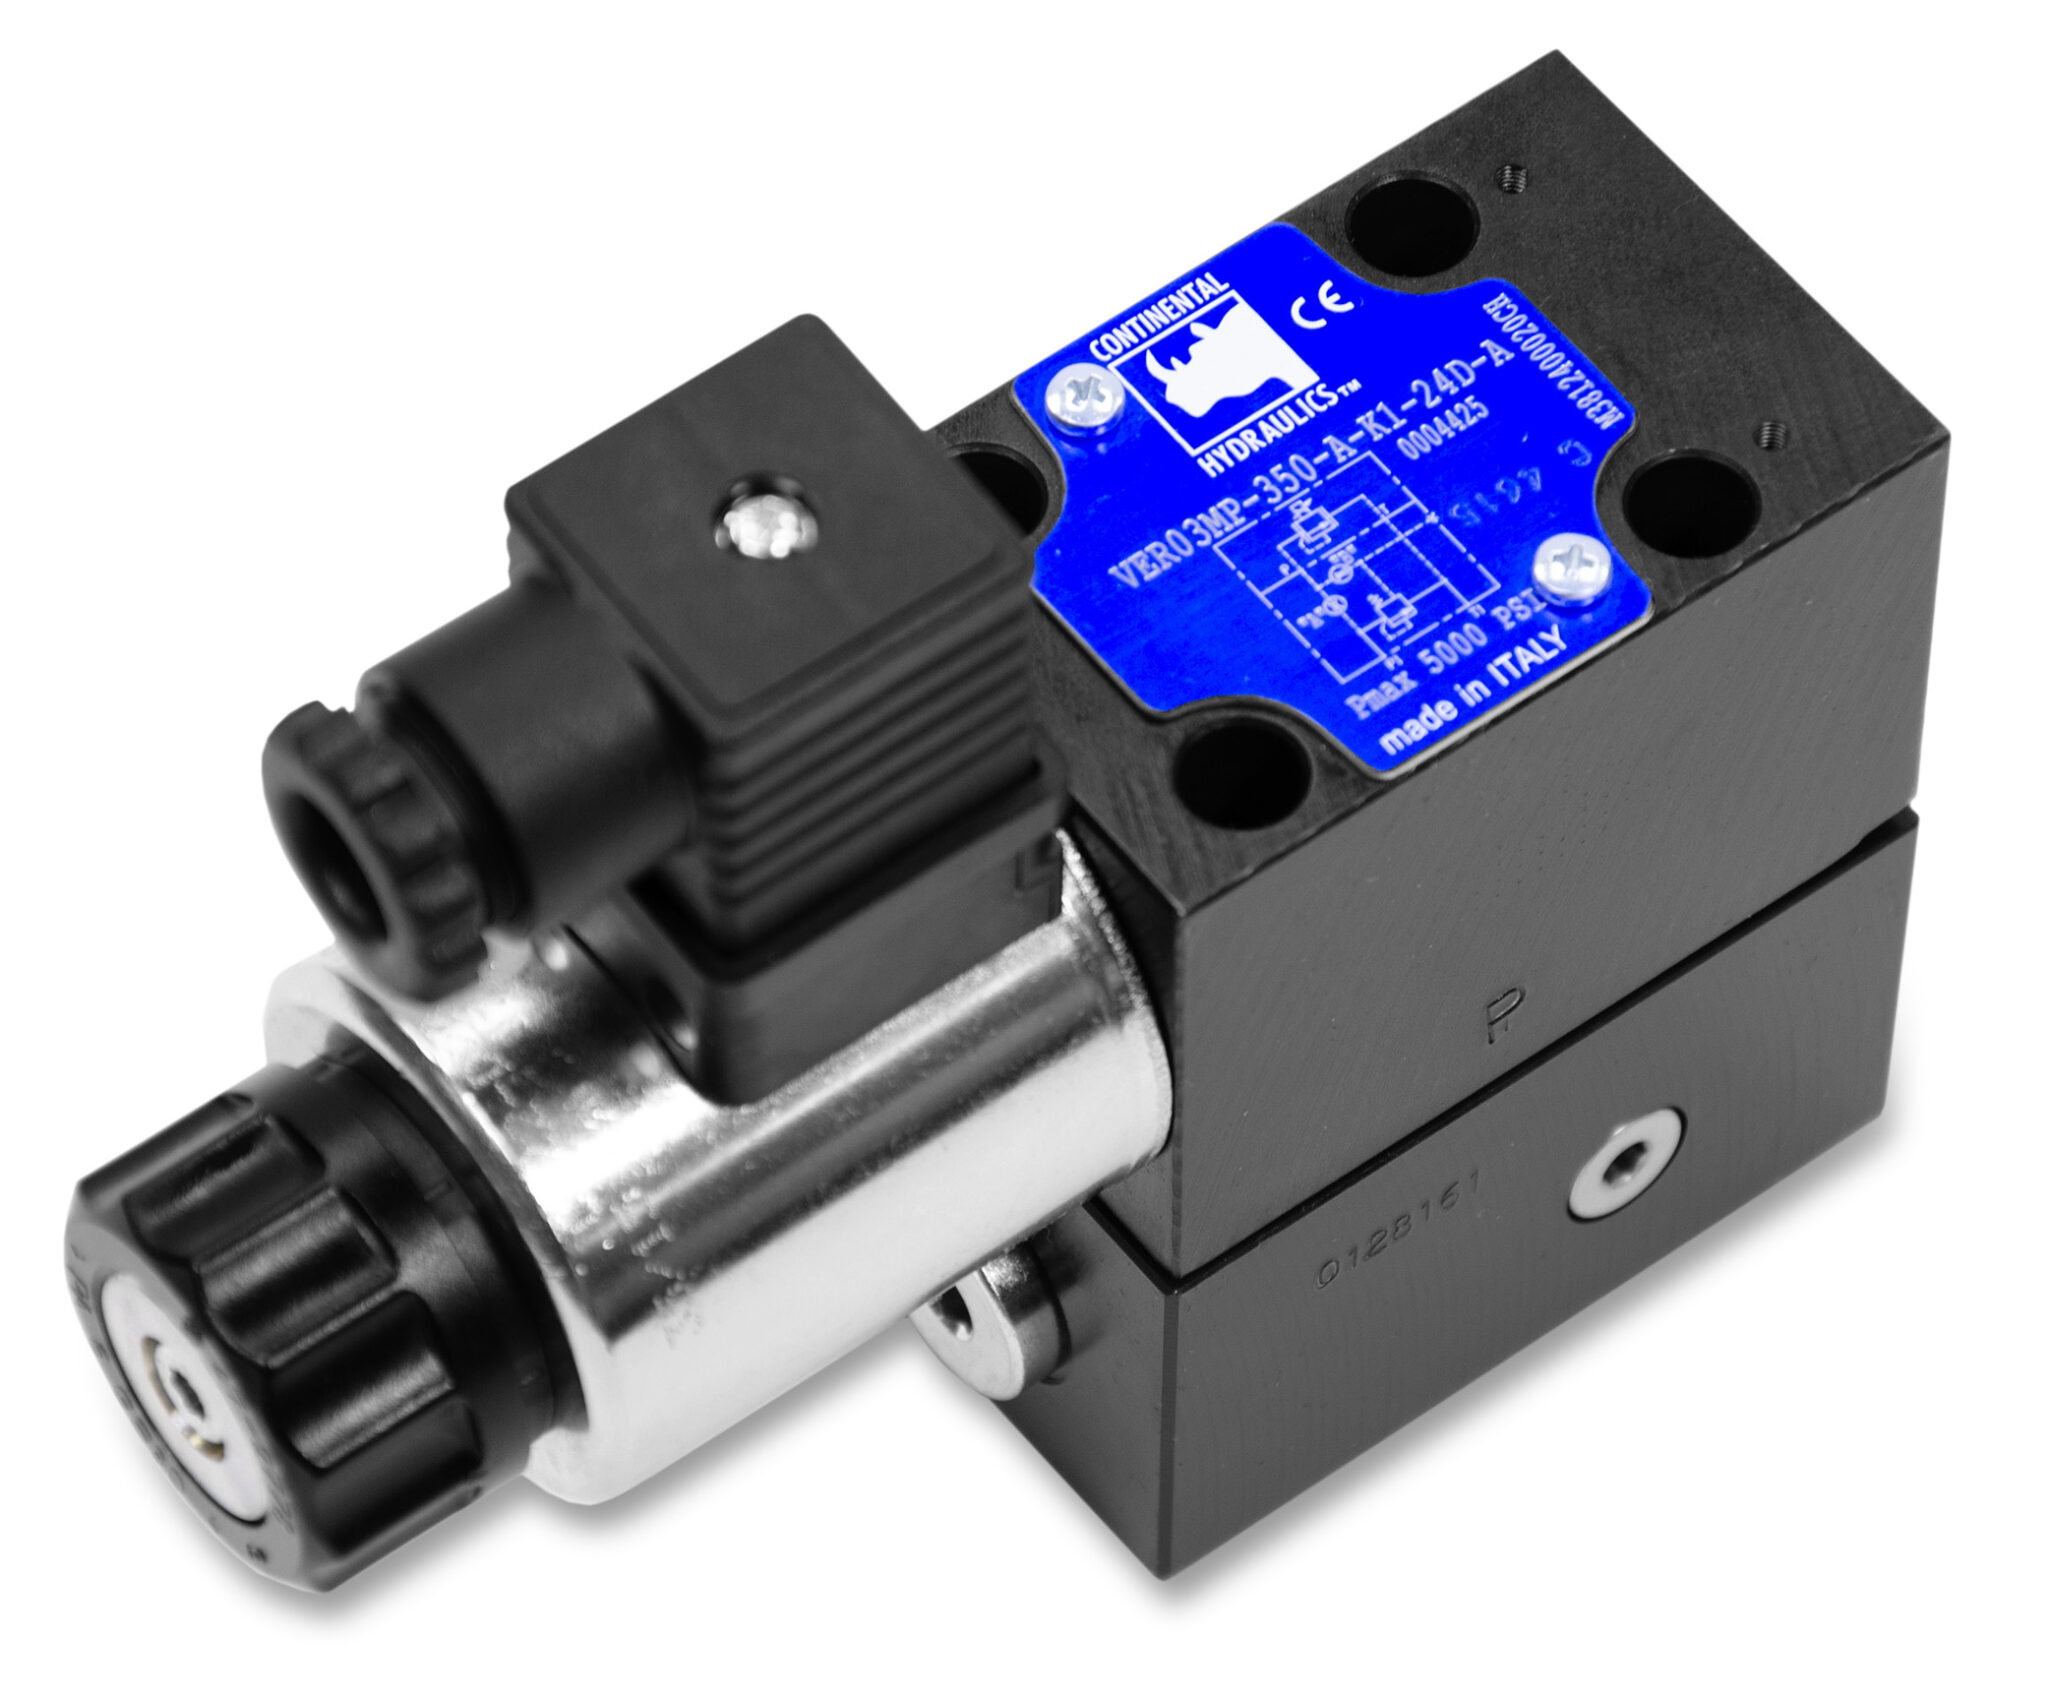 VER03MP pressure control valve product; white background